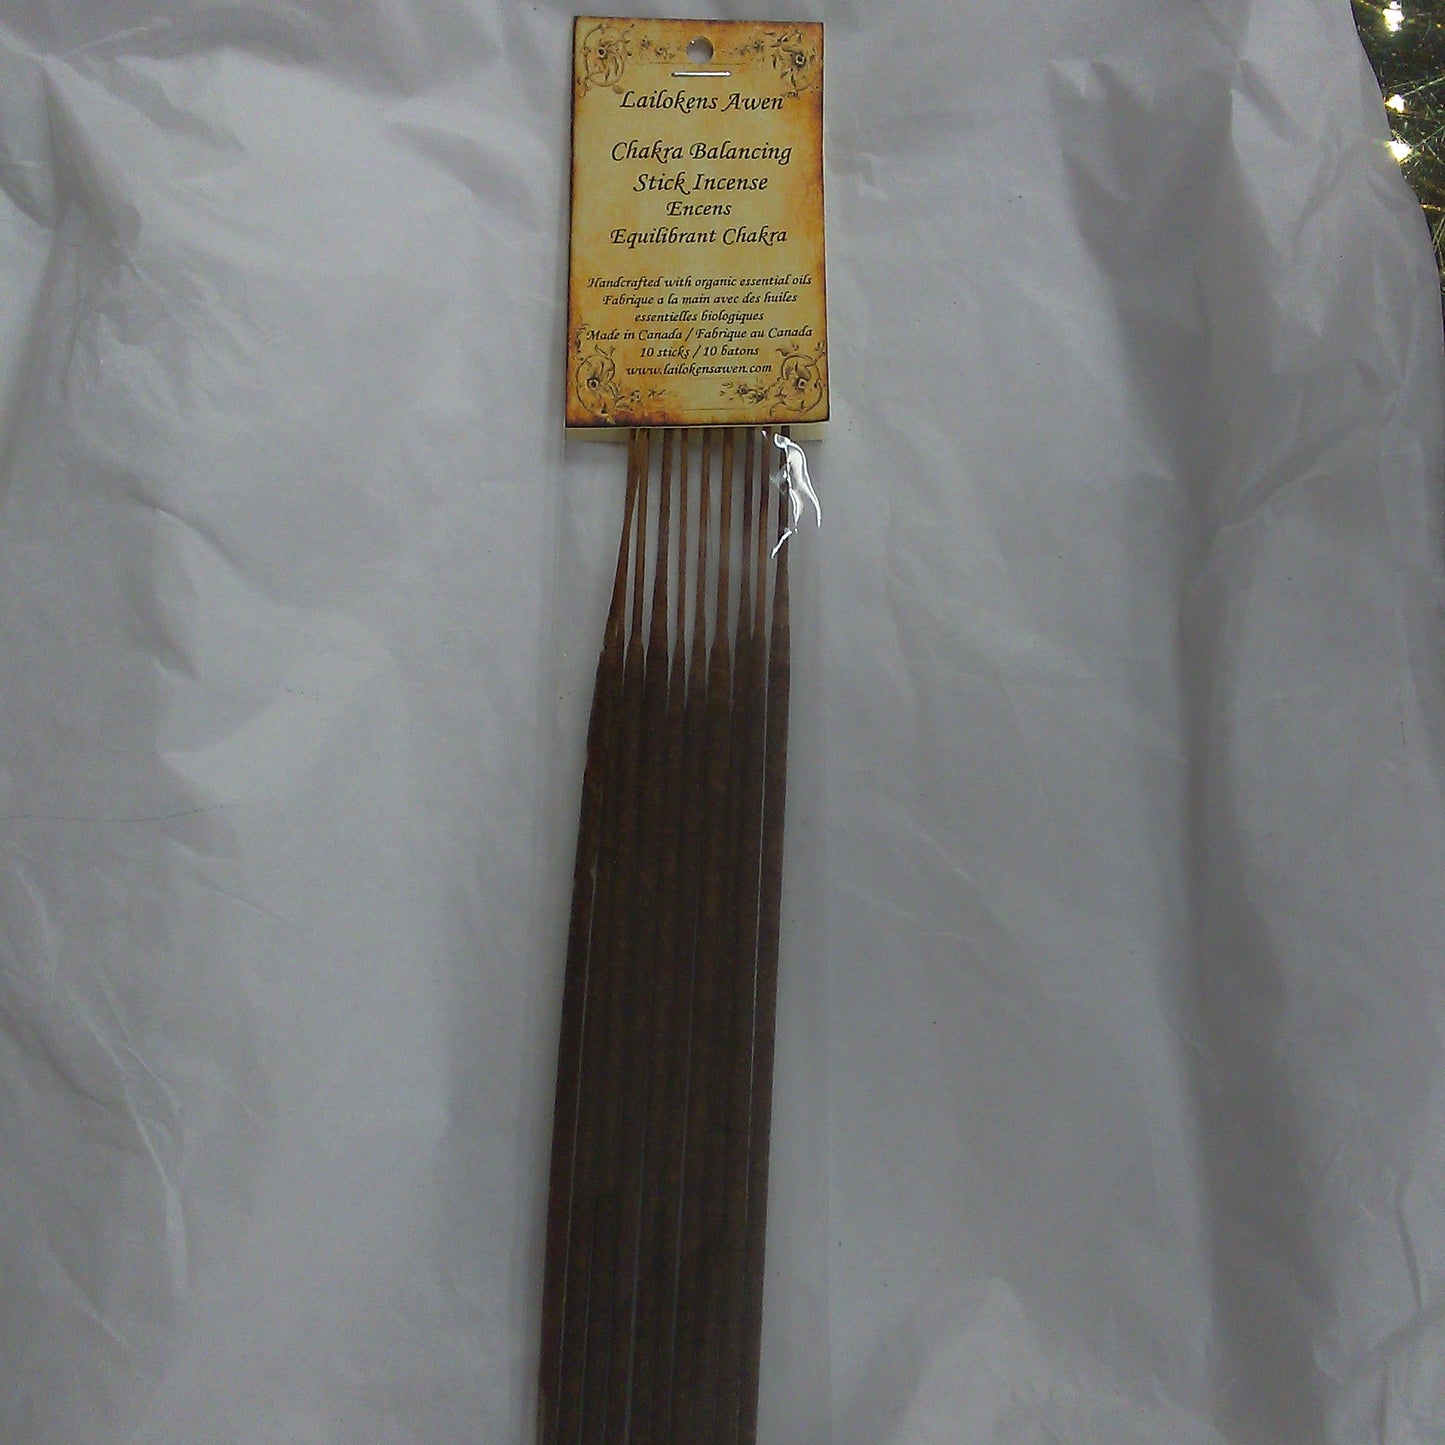 Chakra Balancing Stick Incense